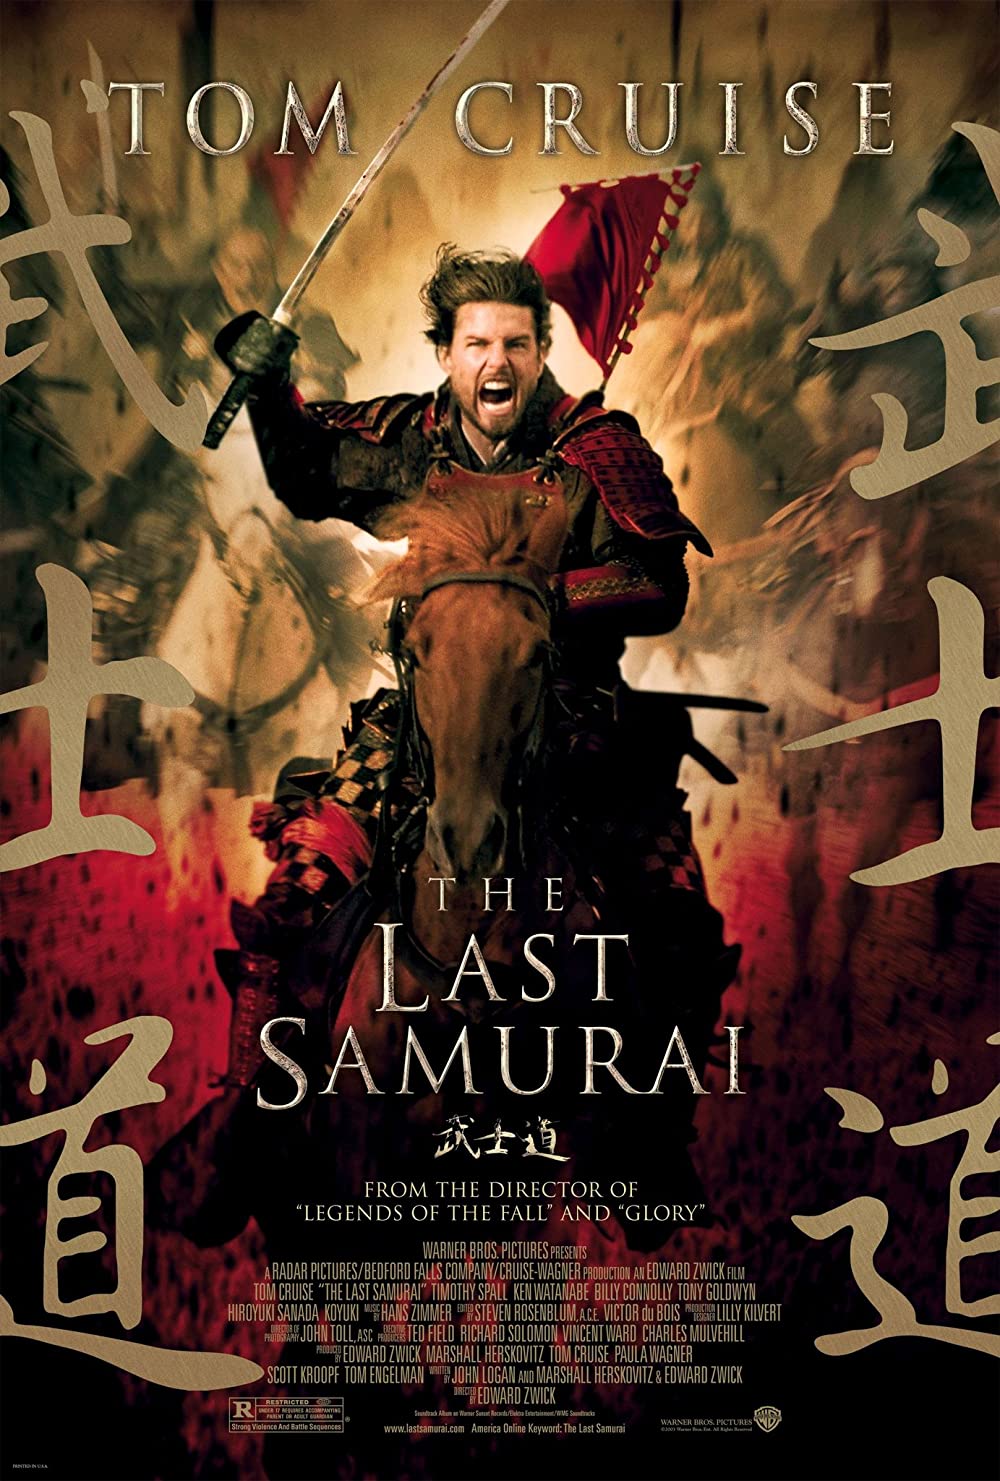 Filmbeschreibung zu The Last Samurai